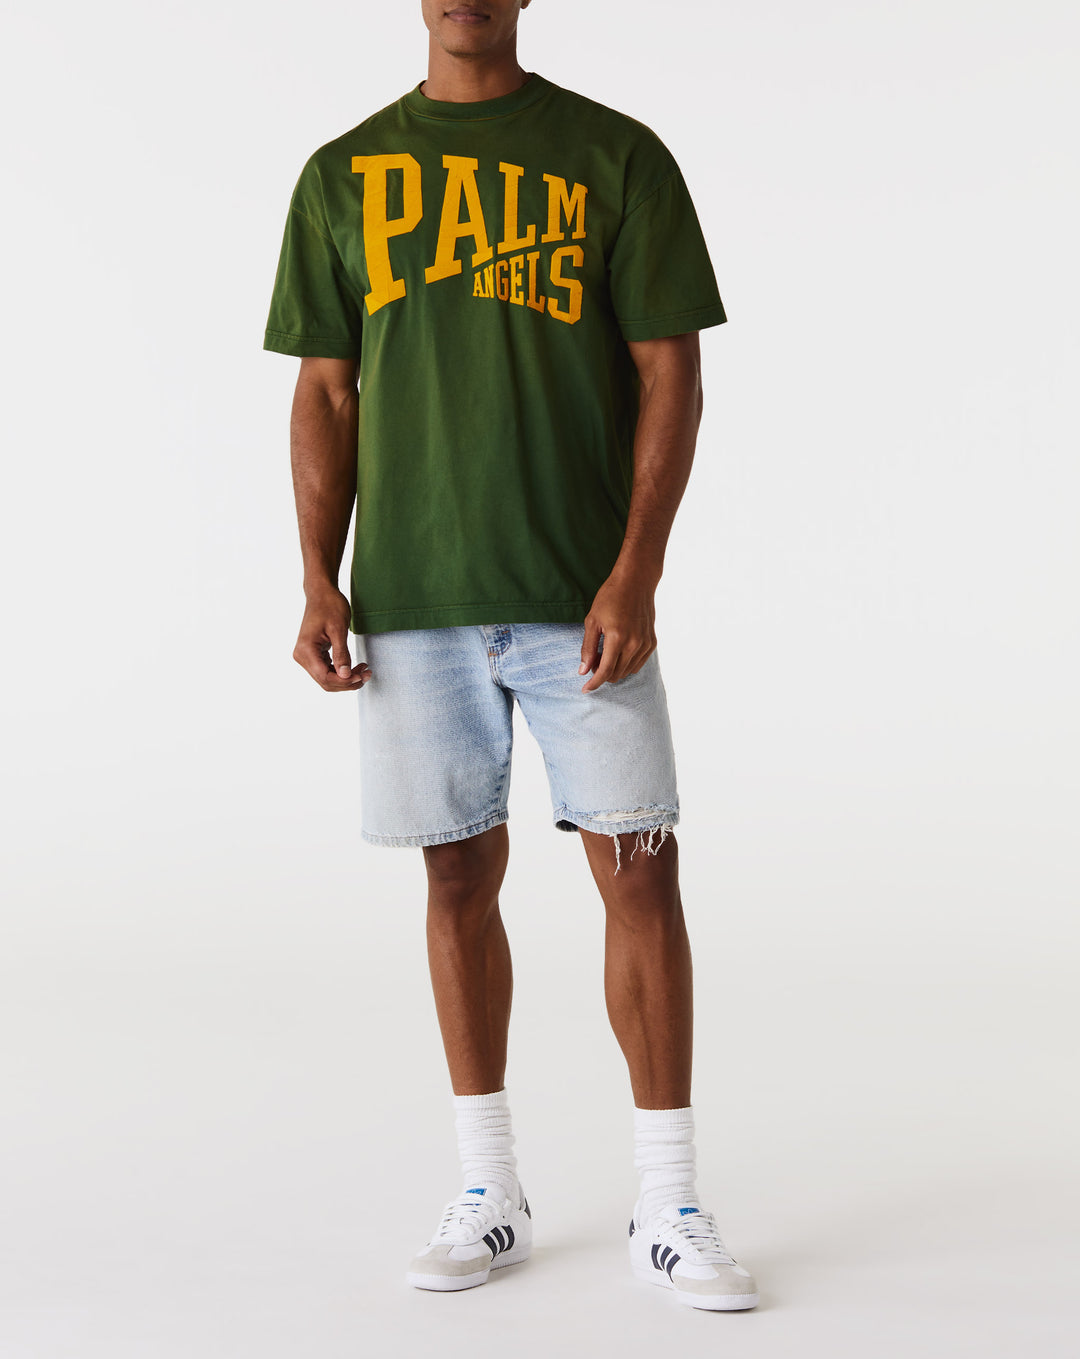 Palm Angels College T-Shirt  - XHIBITION